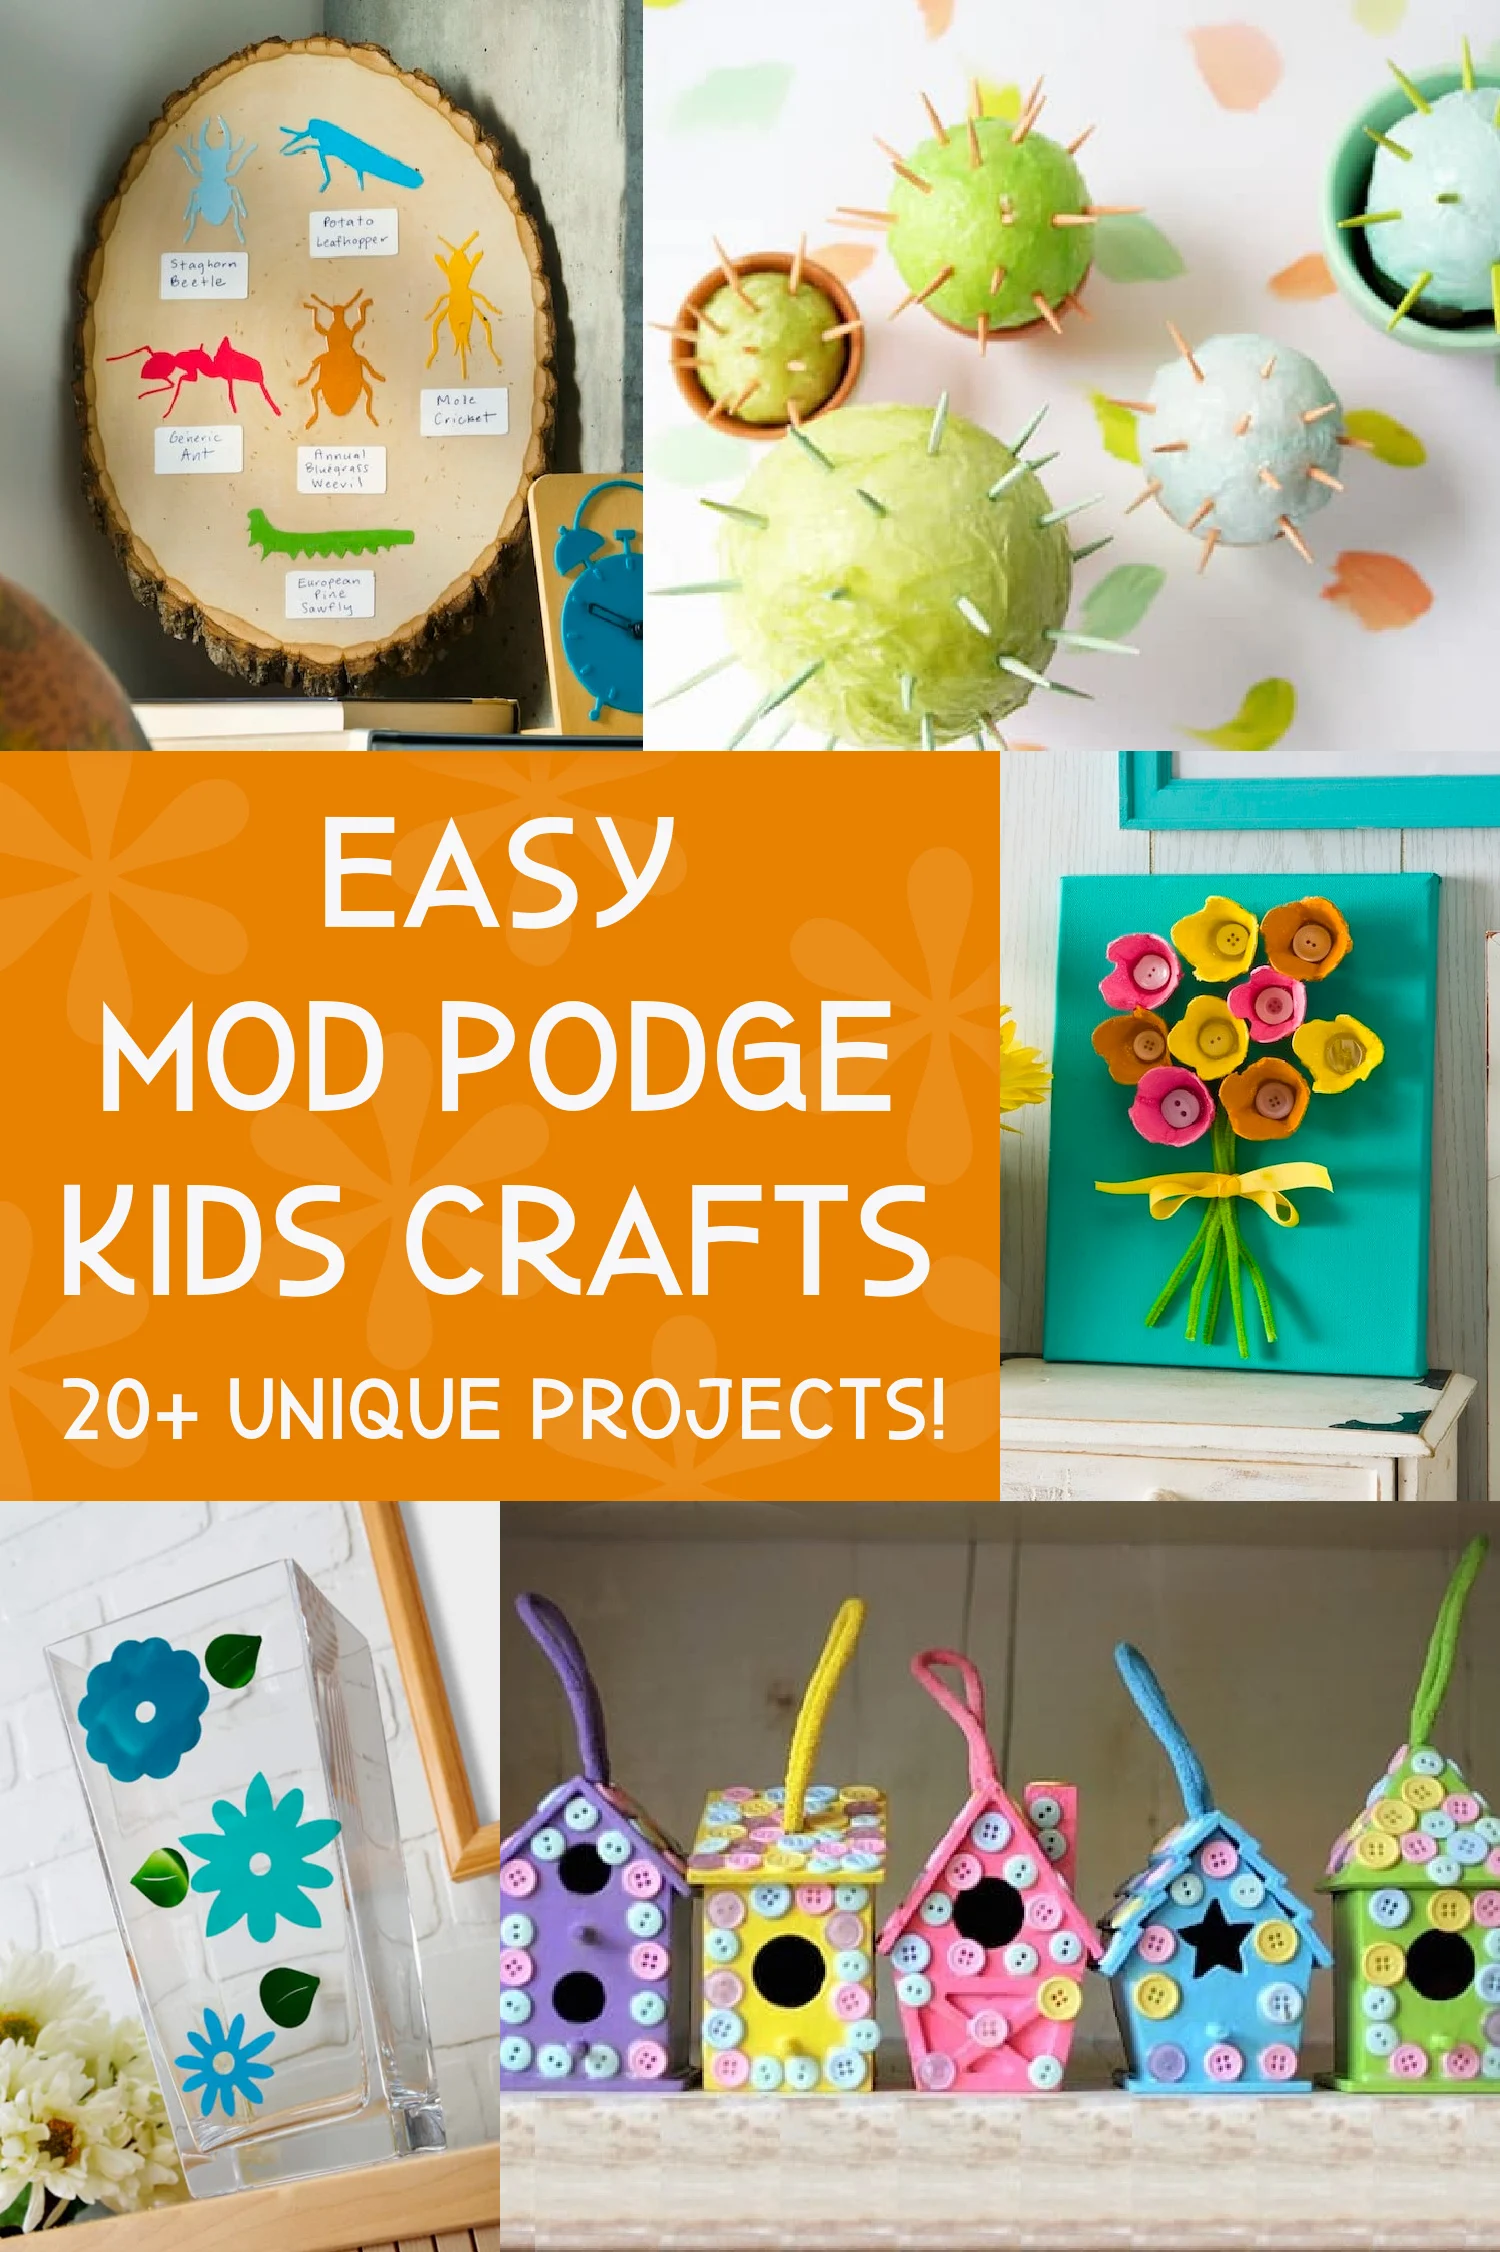 Mod Podge Crafts for Kids that Are Guaranteed Fun! - Mod Podge Rocks